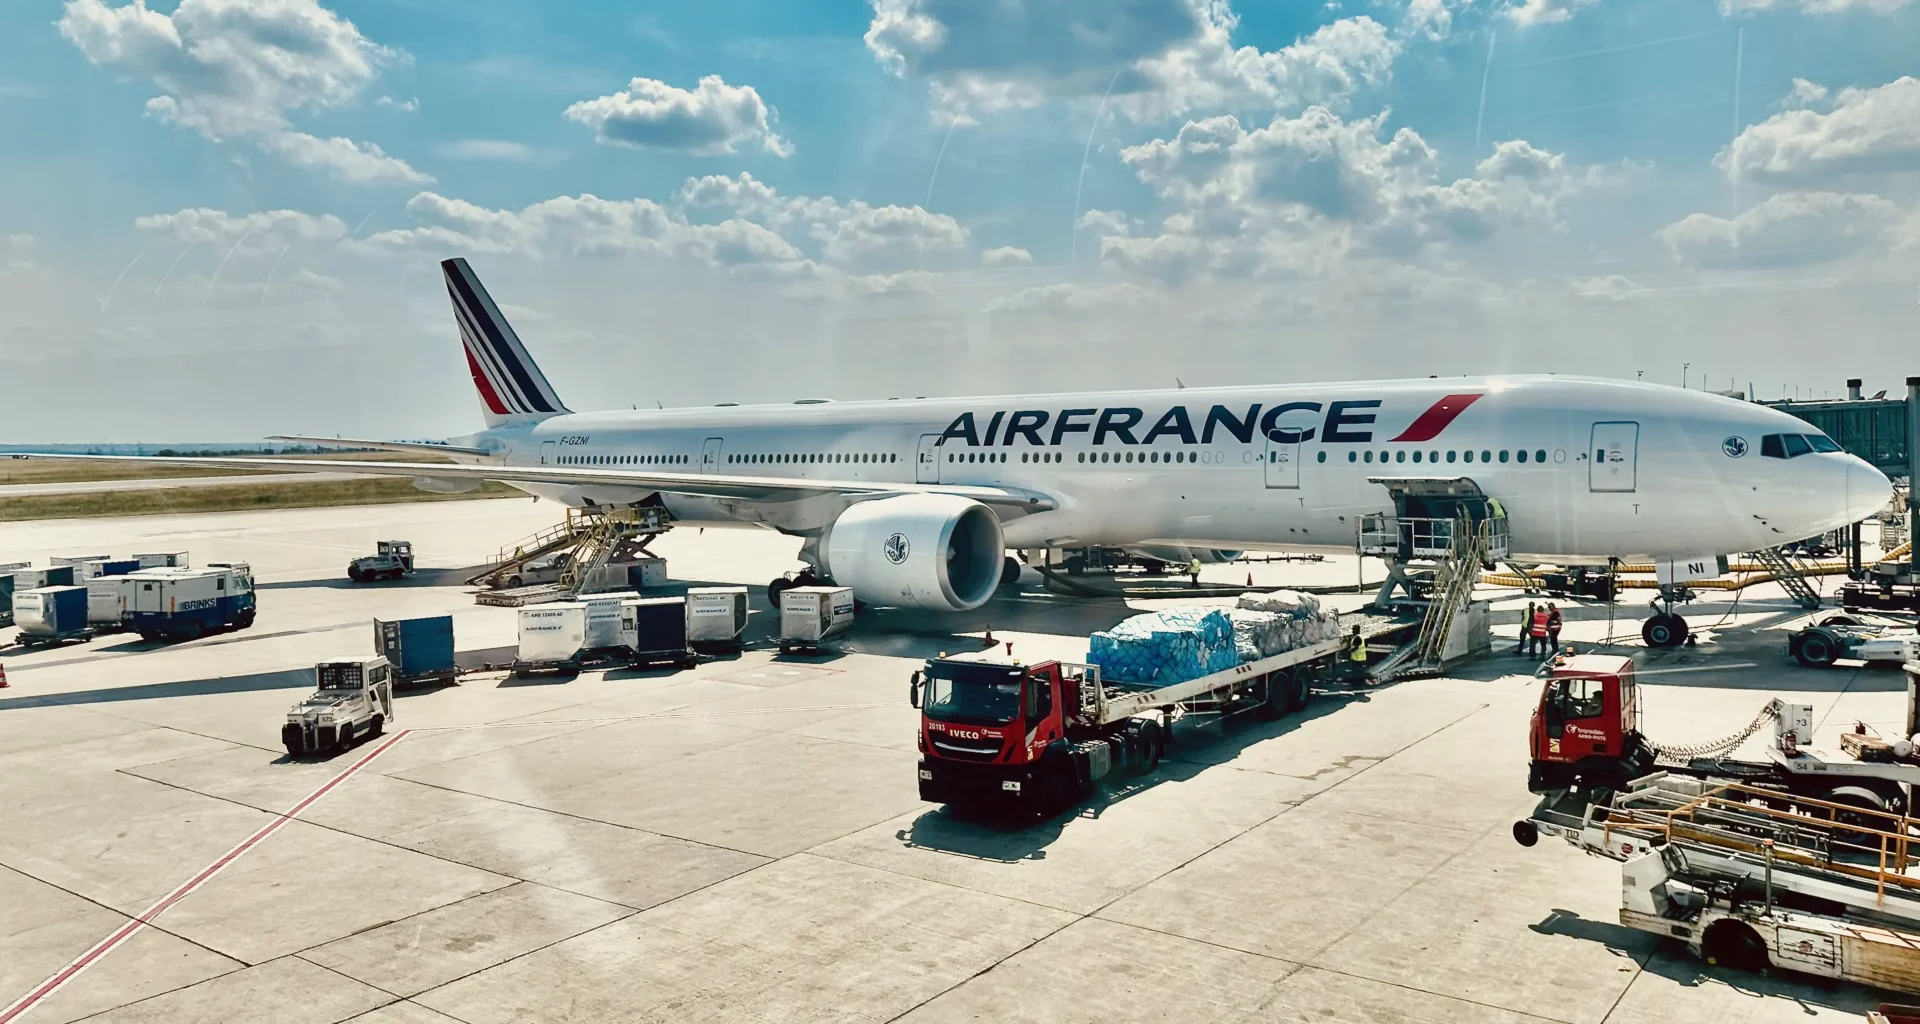 Air France 777 waiting at gate